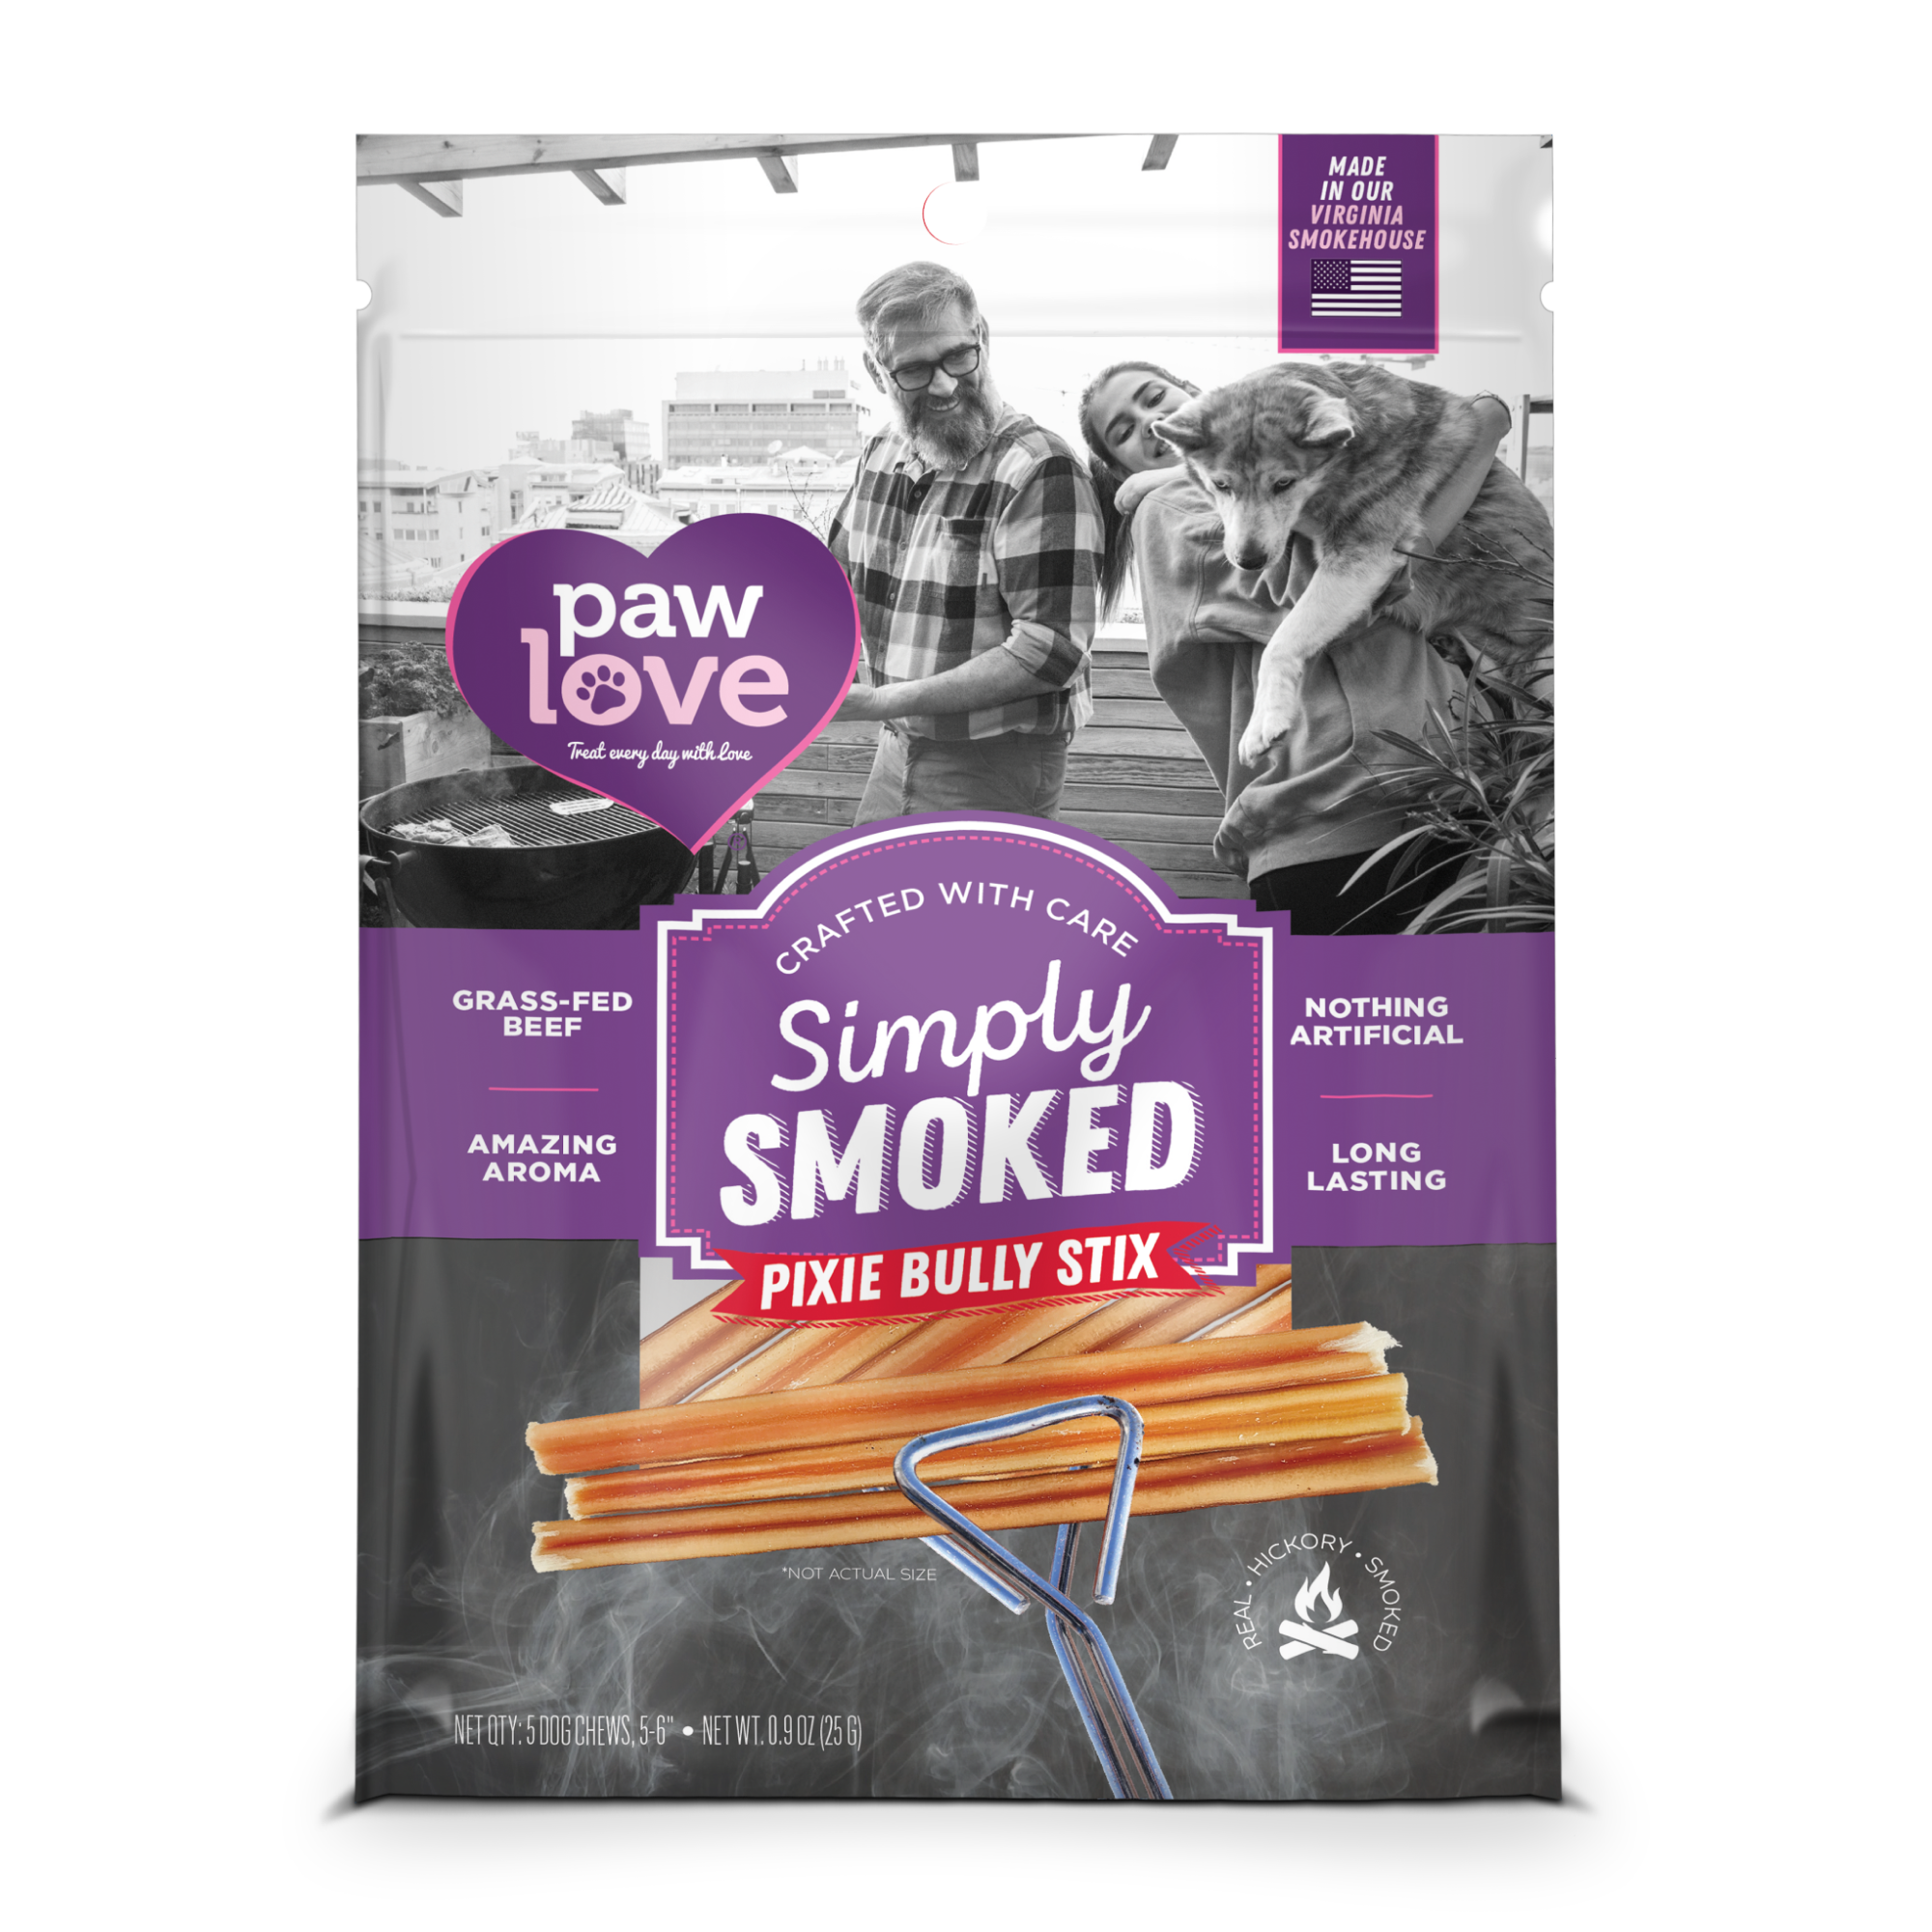 Paw Love's Simply Smoked Pixie Bully Stix 5 Pack, raw dog food.